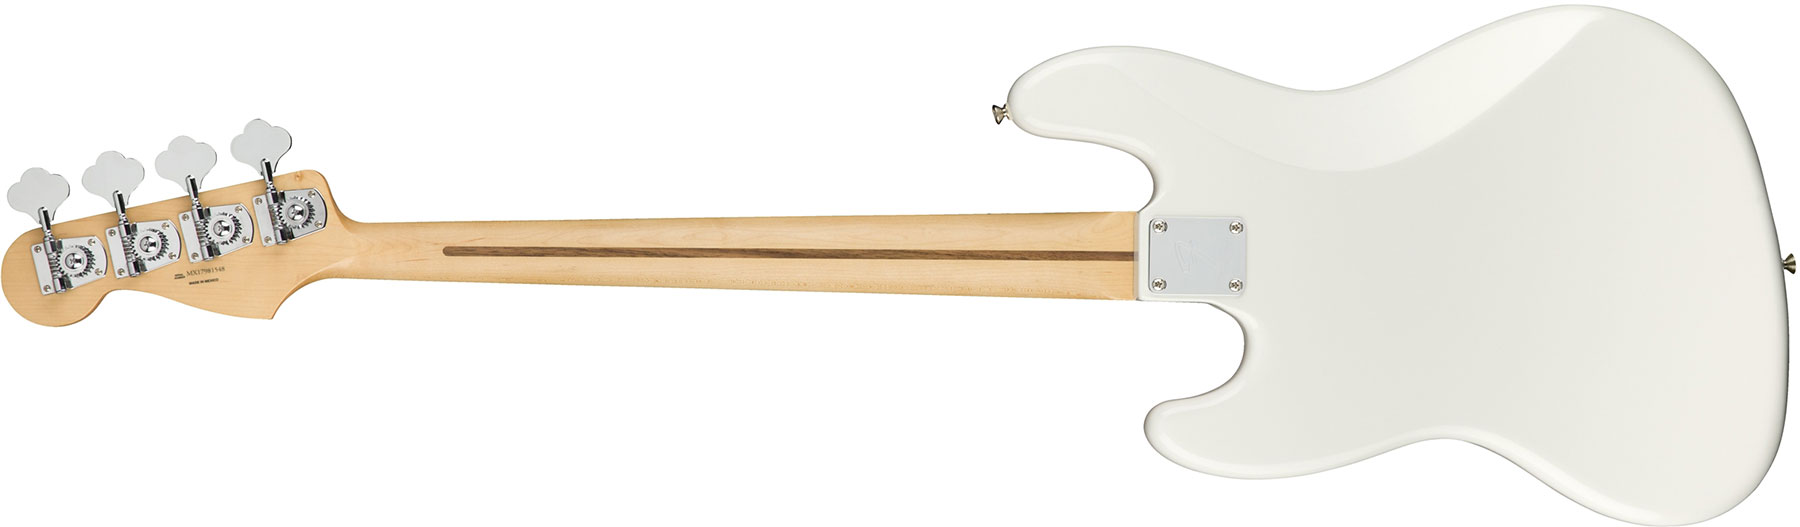 Fender Jazz Bass Player Mex Mn - Polar White - Solidbody E-bass - Variation 1